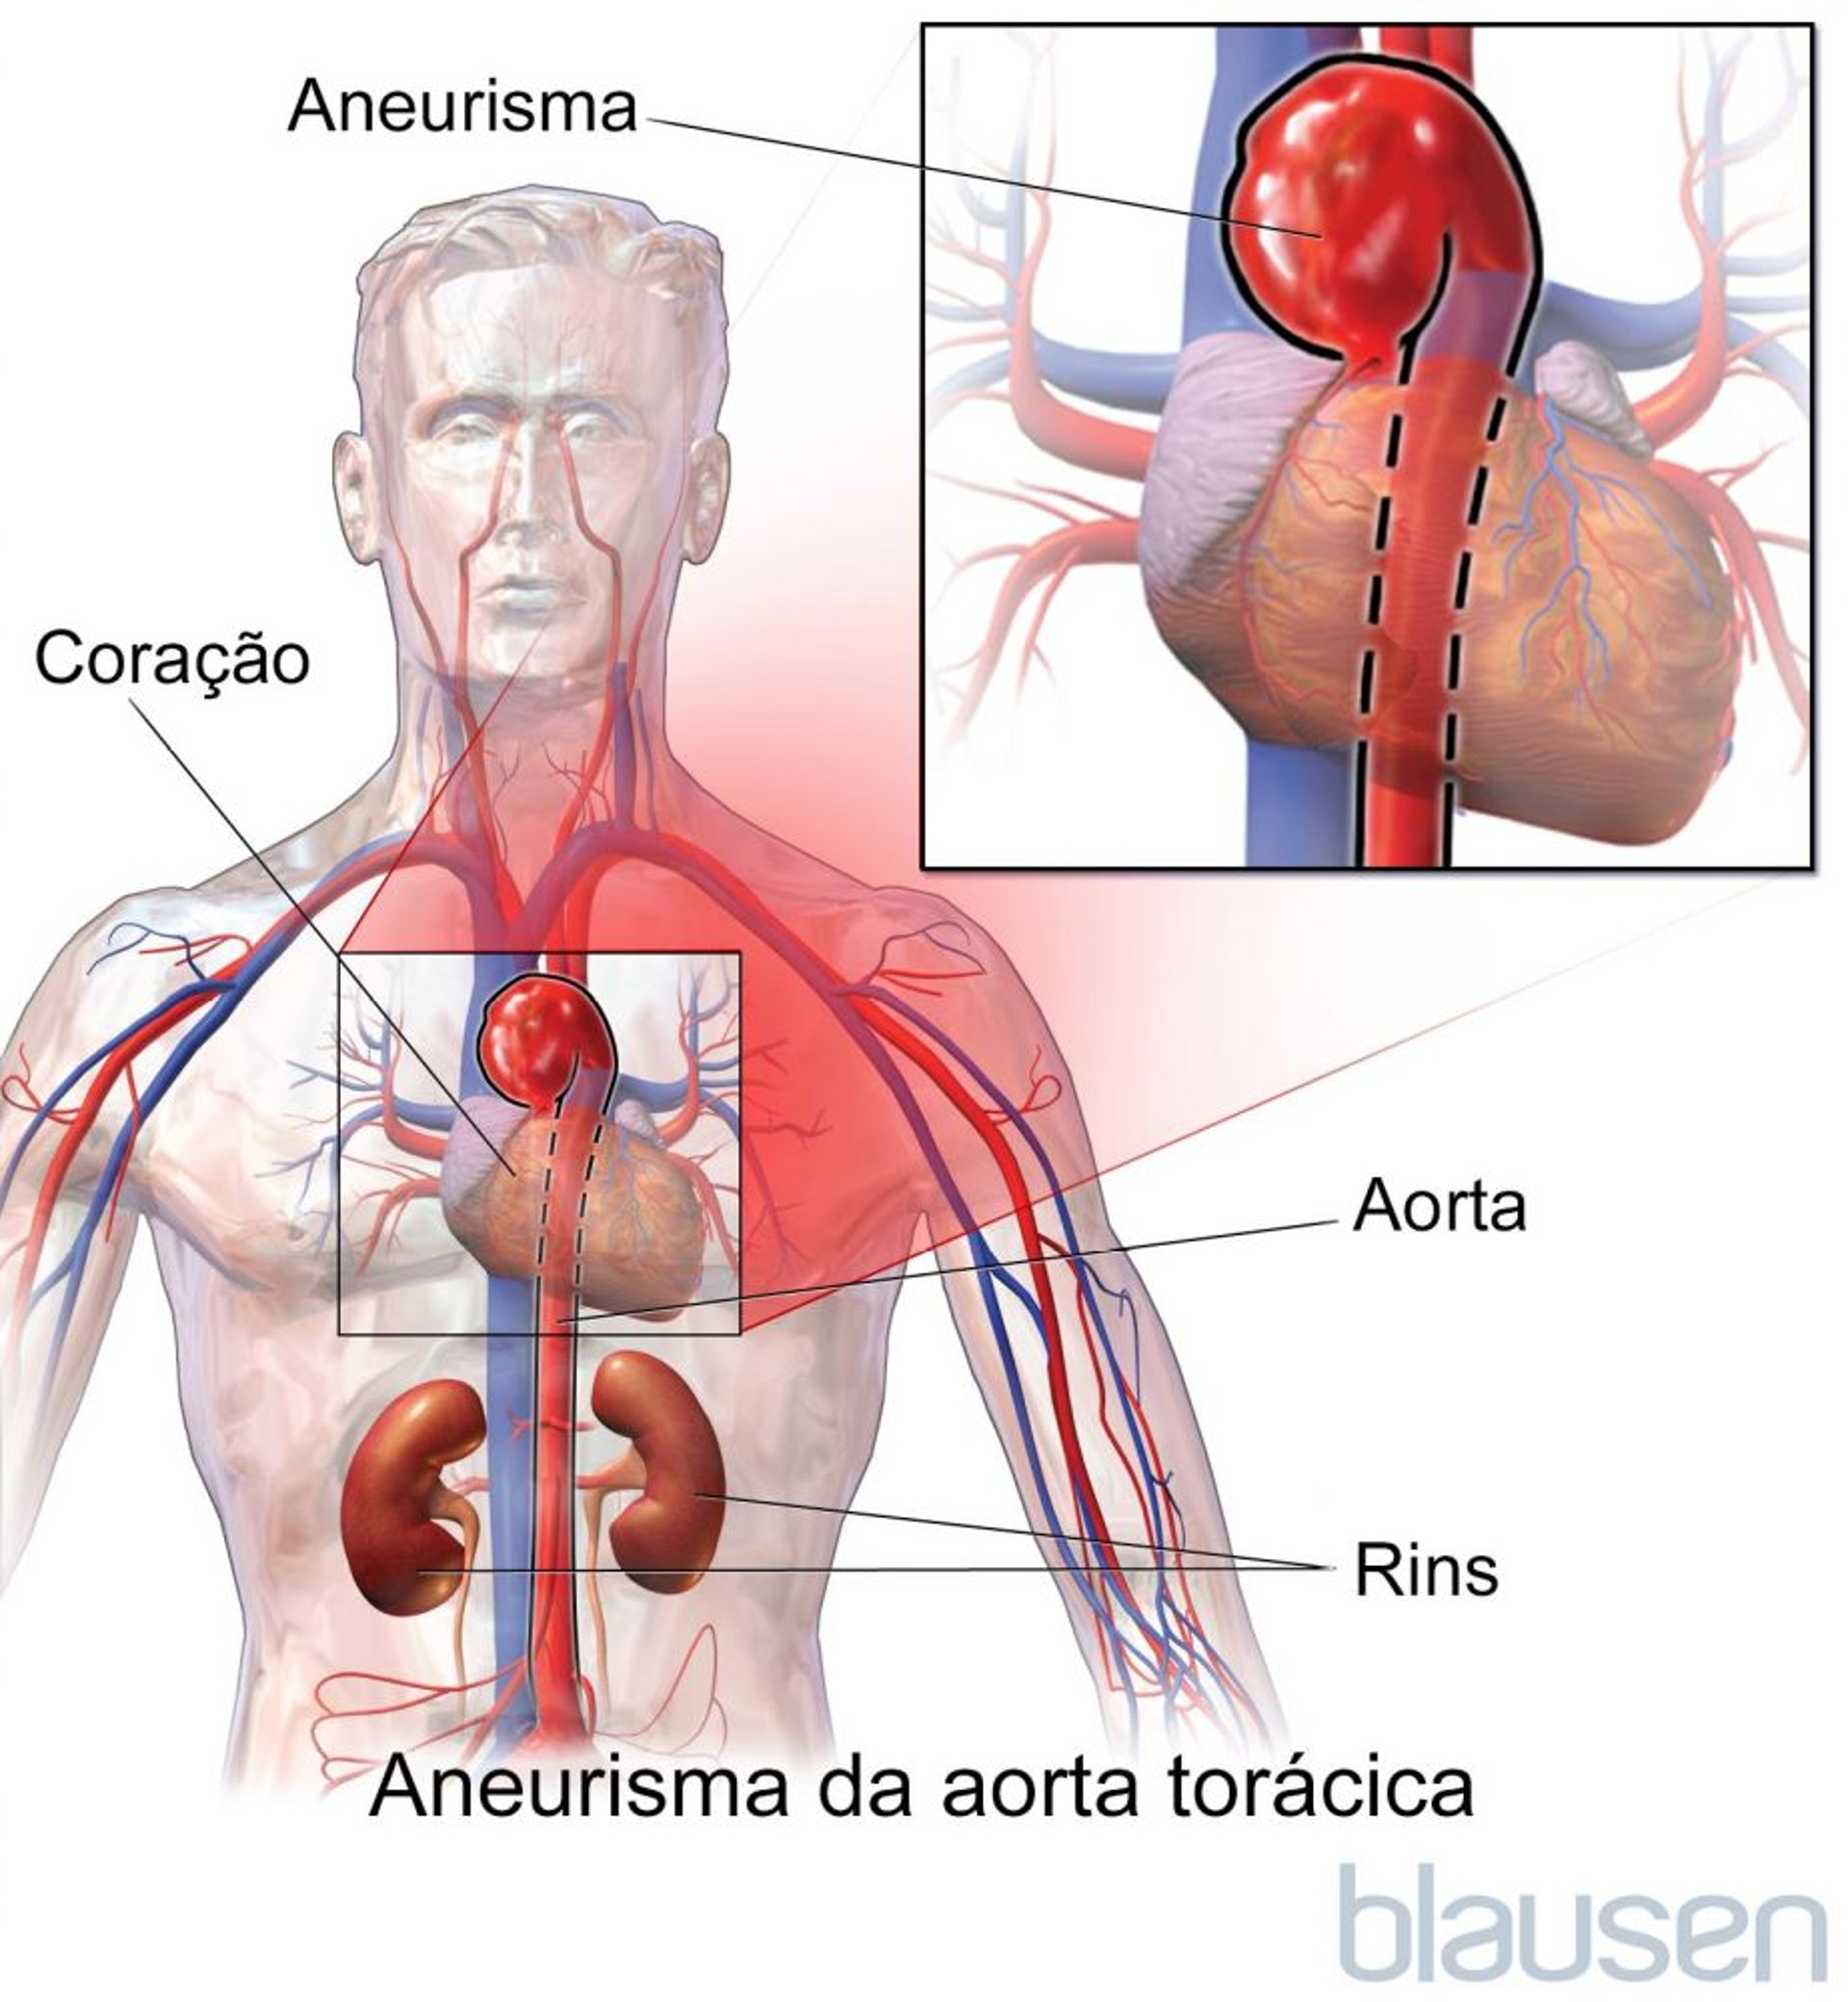 Aneurisma da aorta torácica